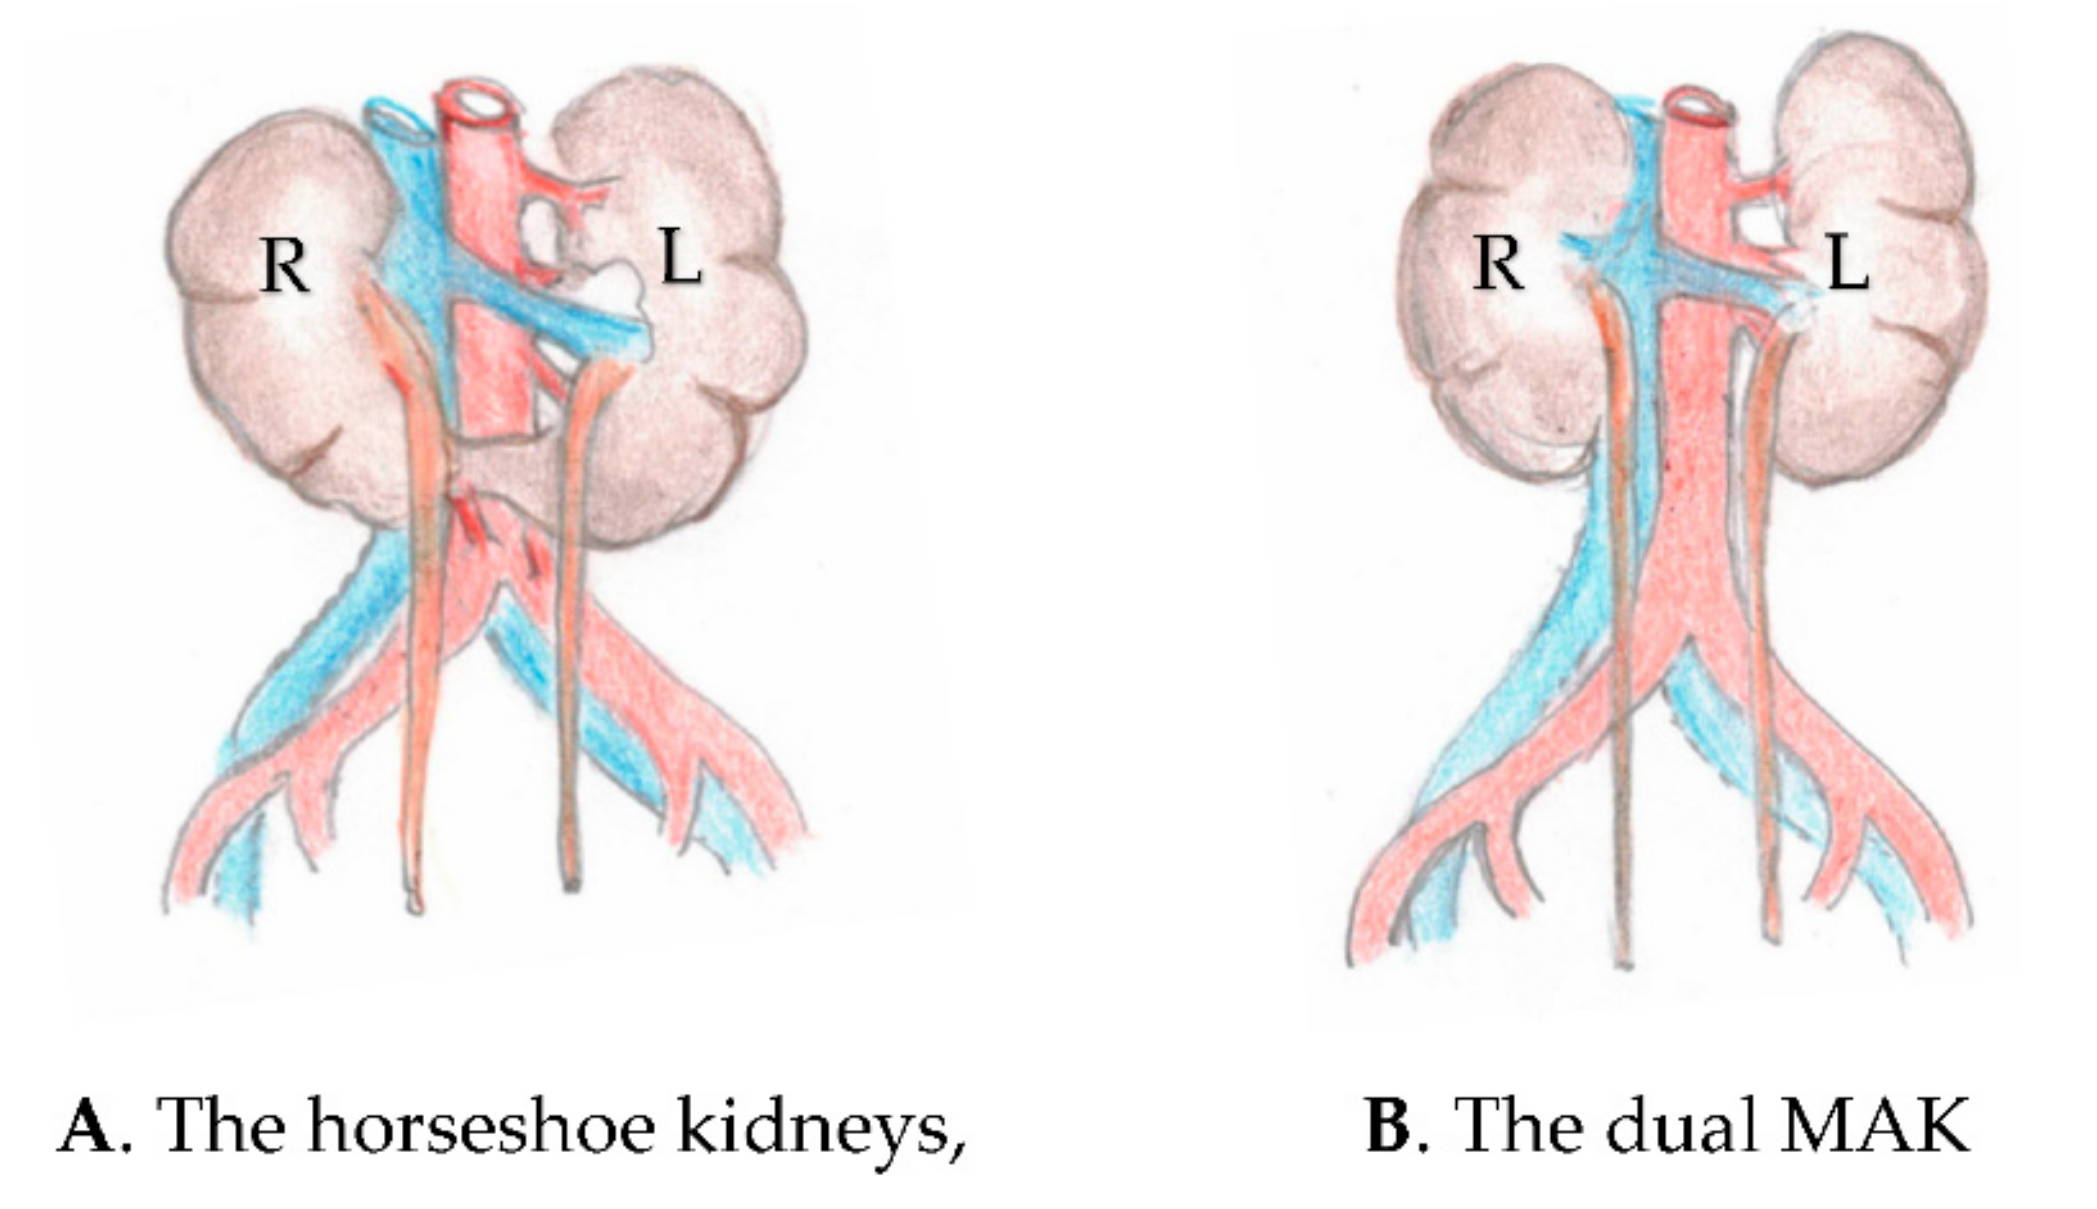 kidney transplant diagram